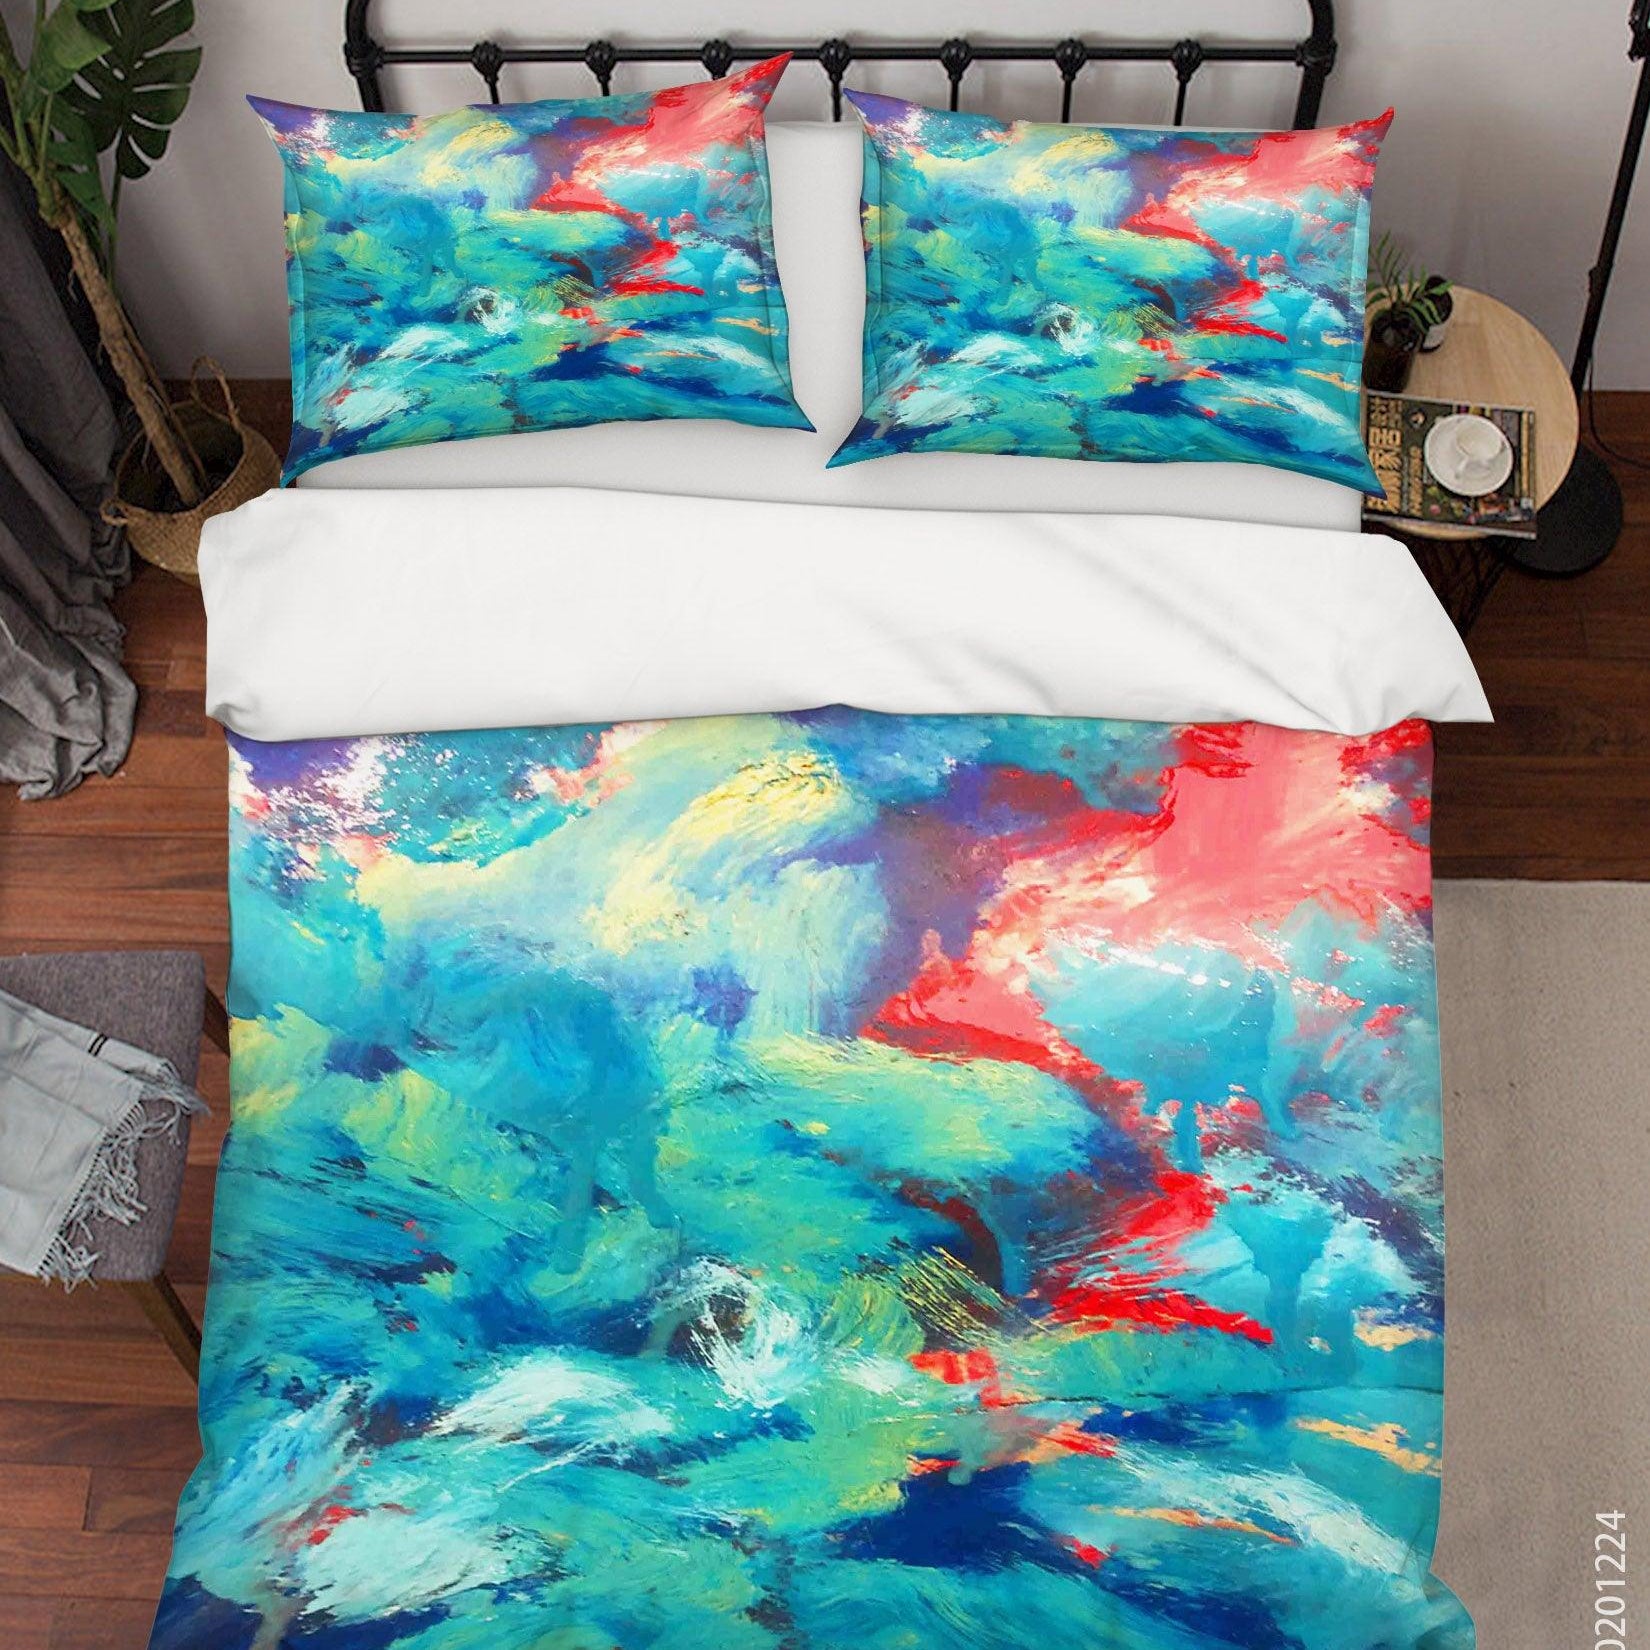 3D Abstract Color Oil Painting Quilt Cover Set Bedding Set Duvet Cover Pillowcases 124 LQH- Jess Art Decoration